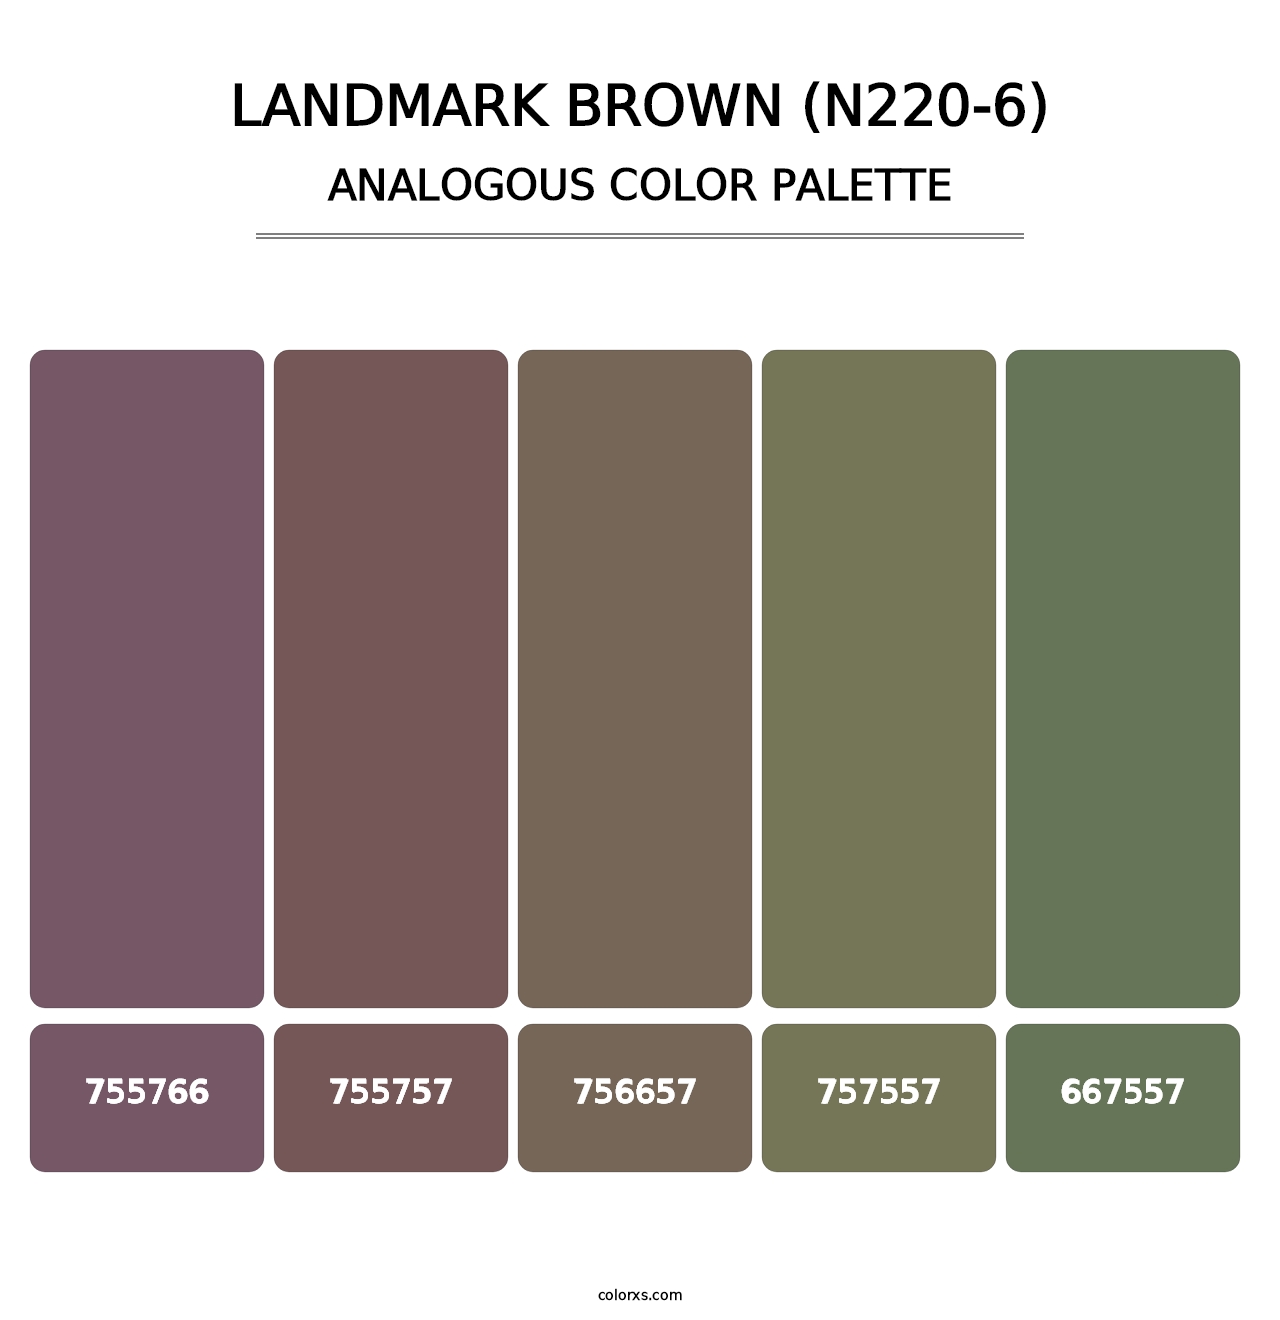 Landmark Brown (N220-6) - Analogous Color Palette